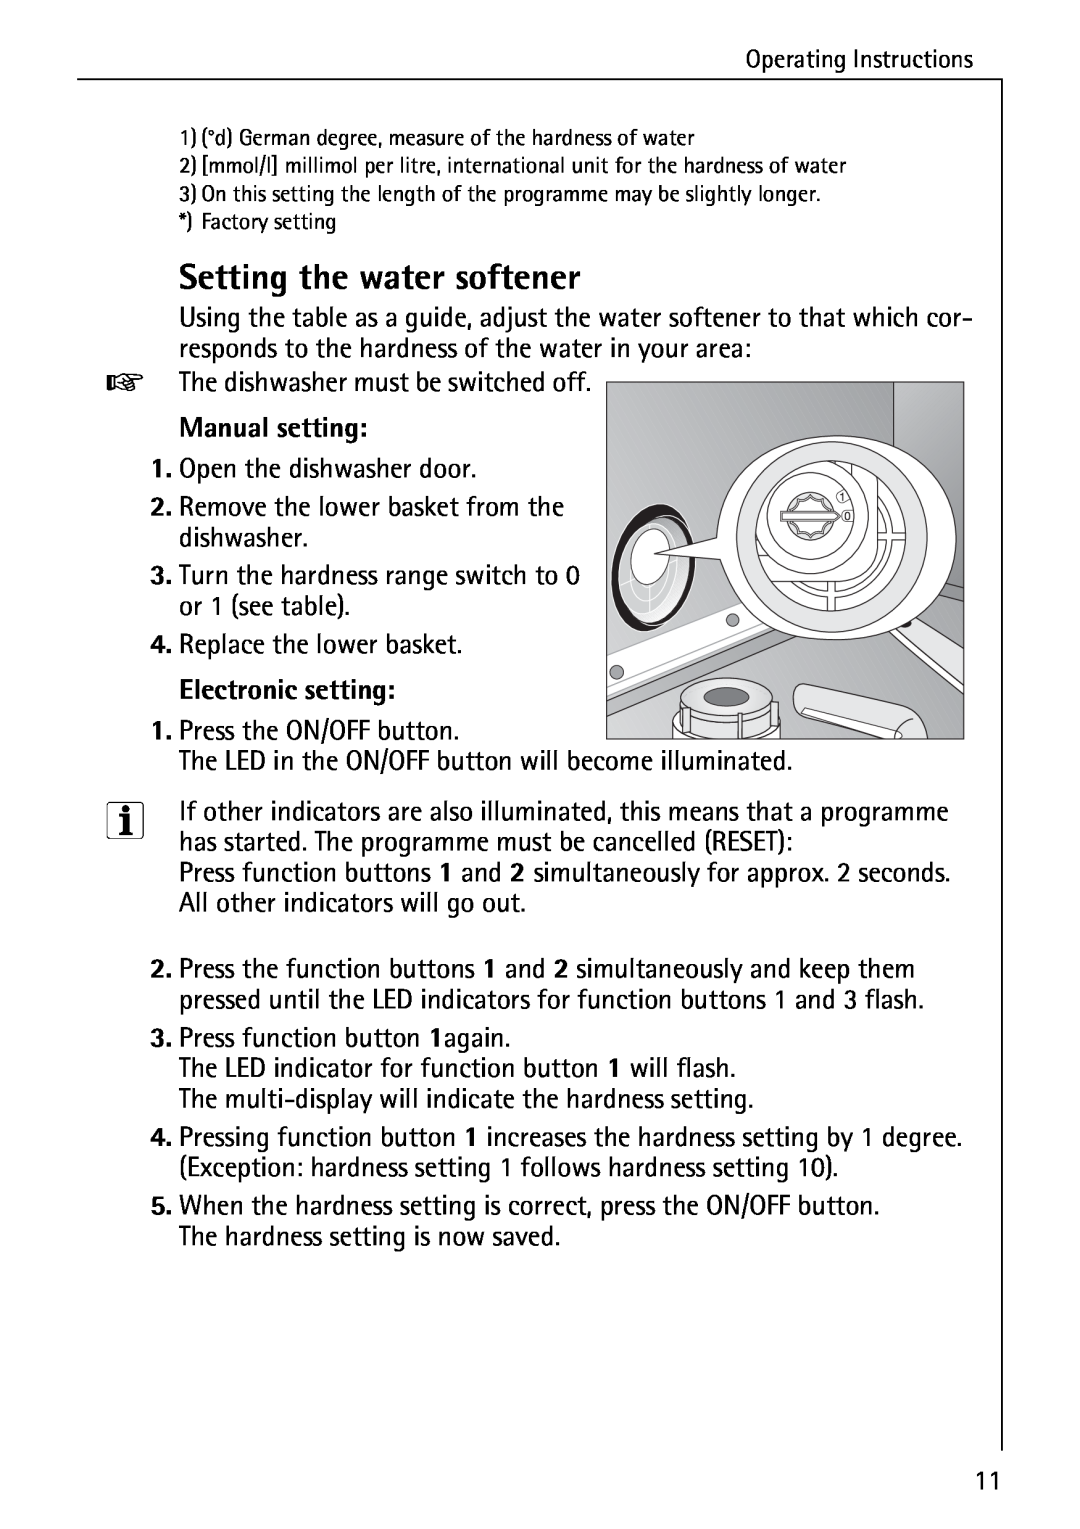 AEG 50760 I manual Manual setting, Electronic setting, Setting the water softener 